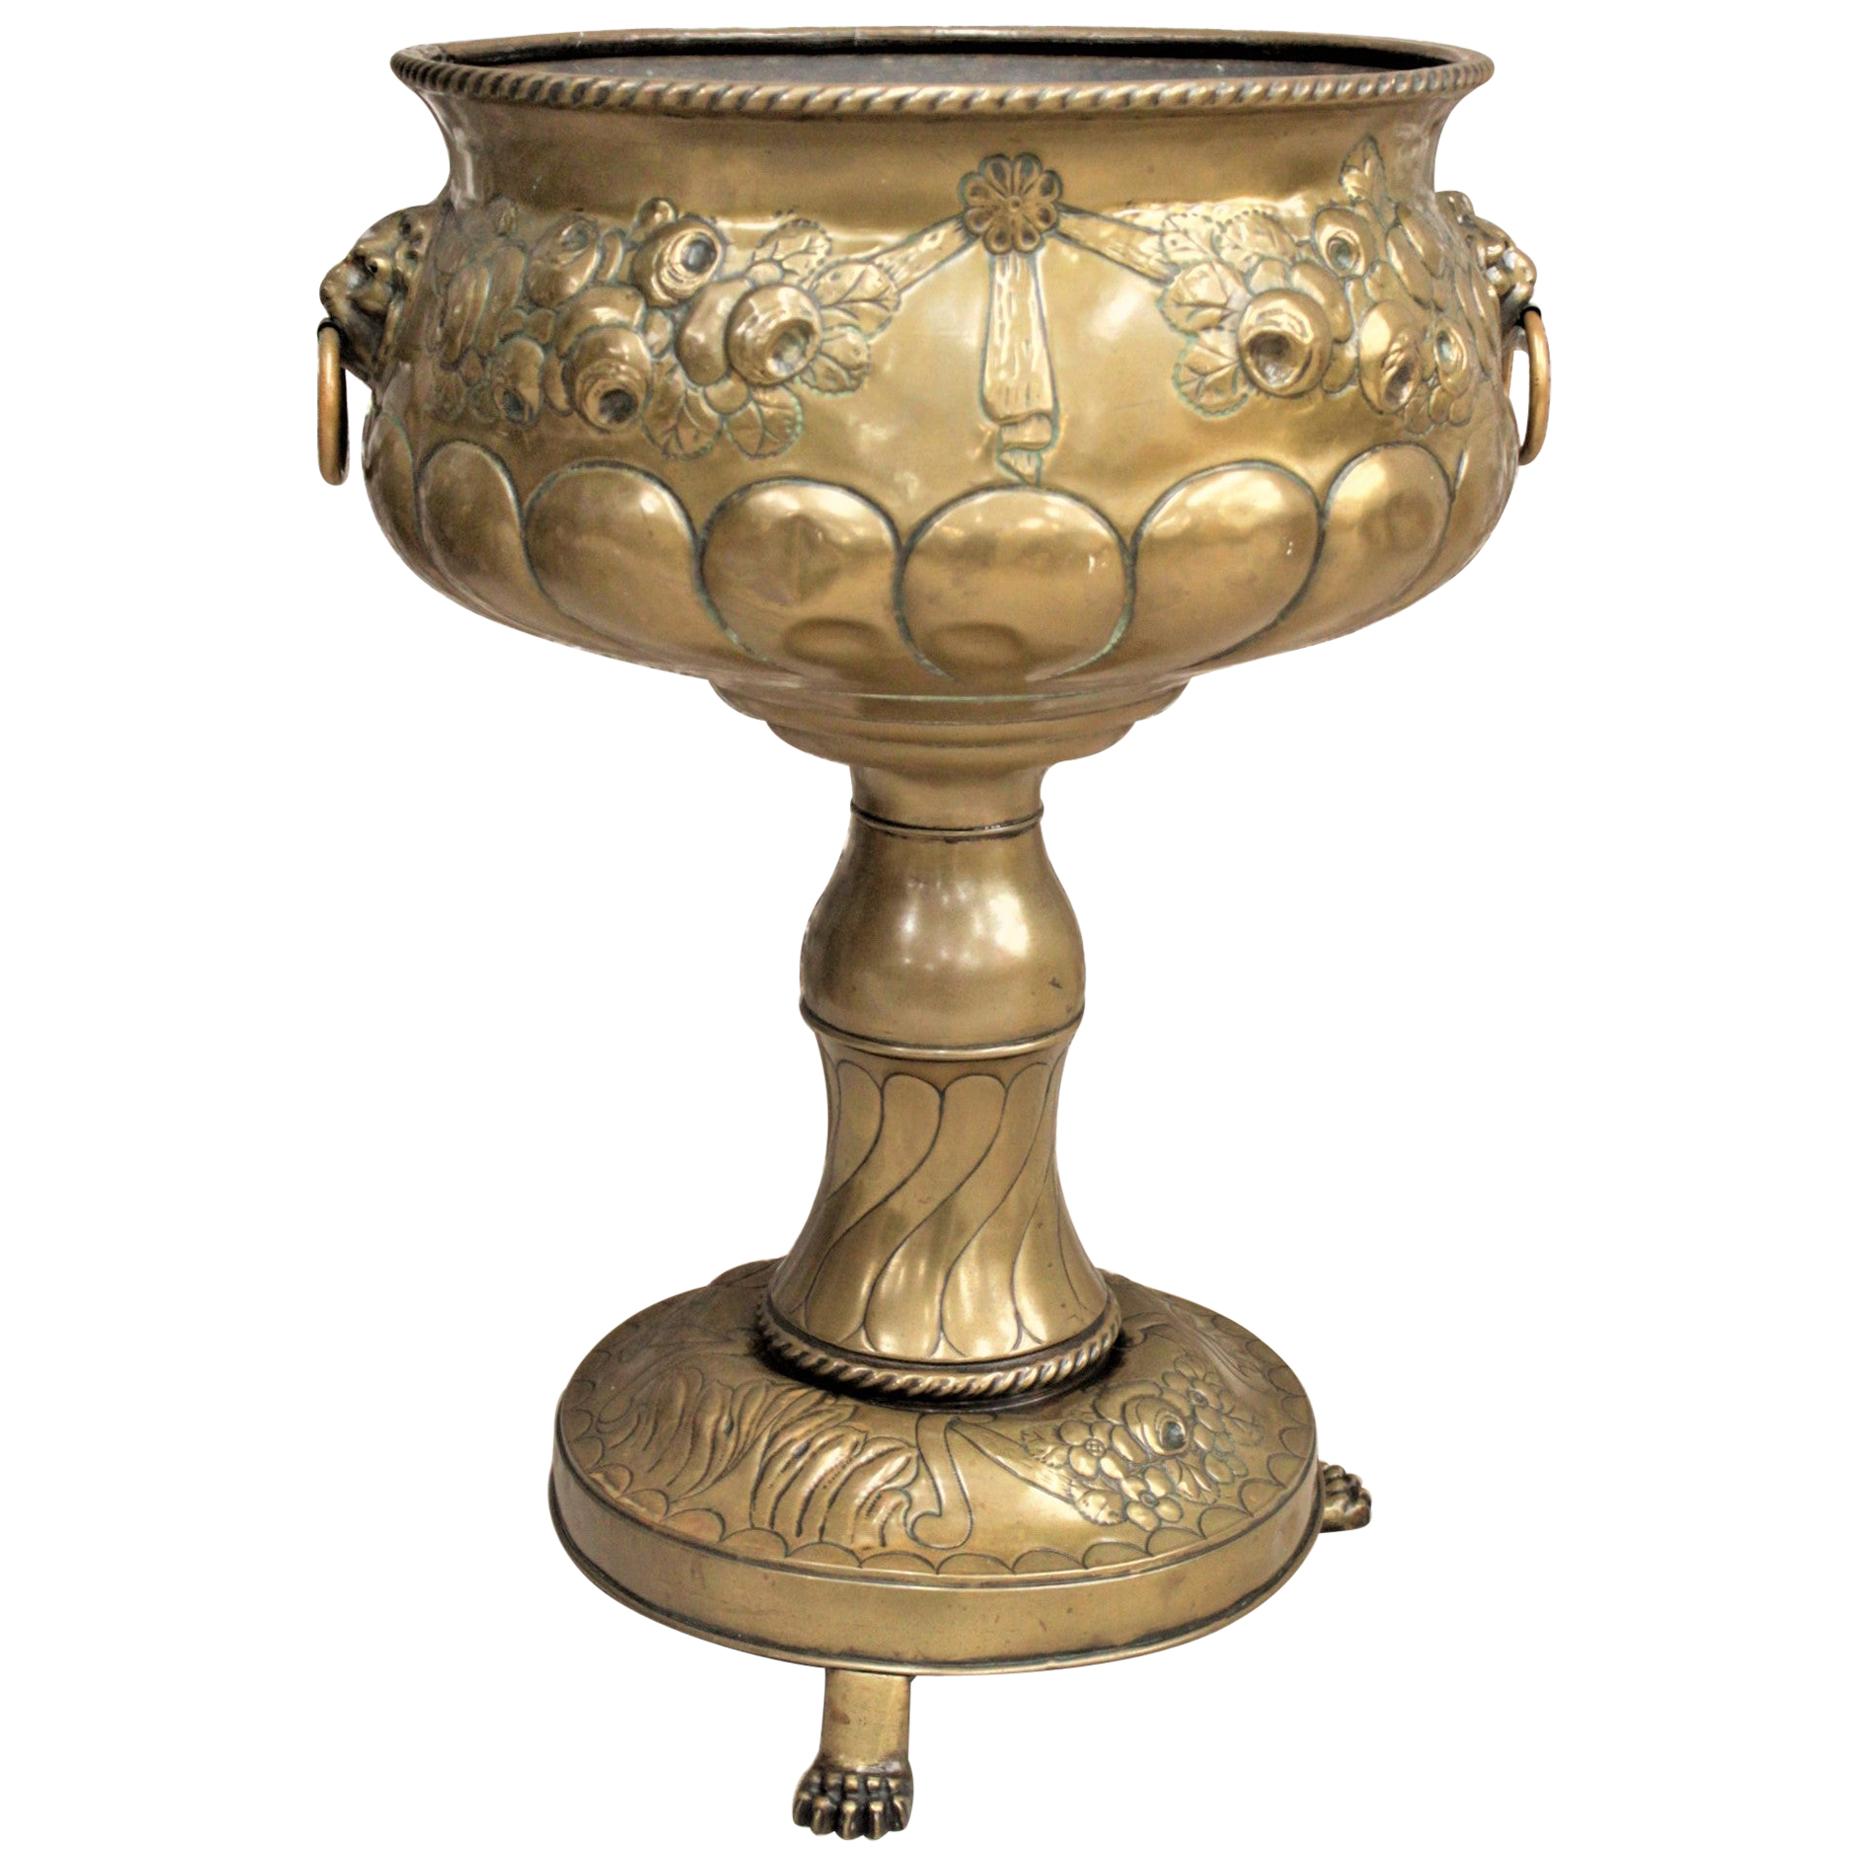 Antique Brass Pedestal Planter with Ornate Floral Decoration